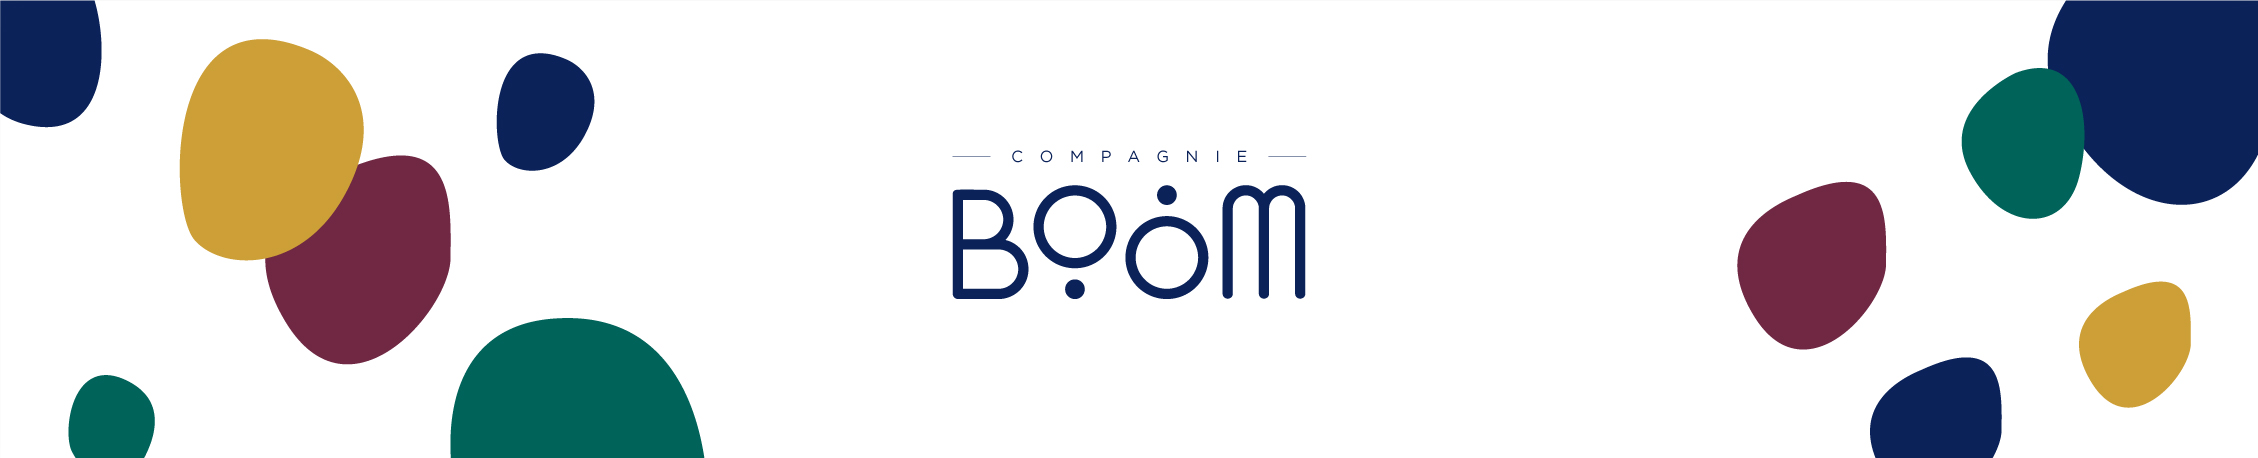 Compagnie BOOM Logo